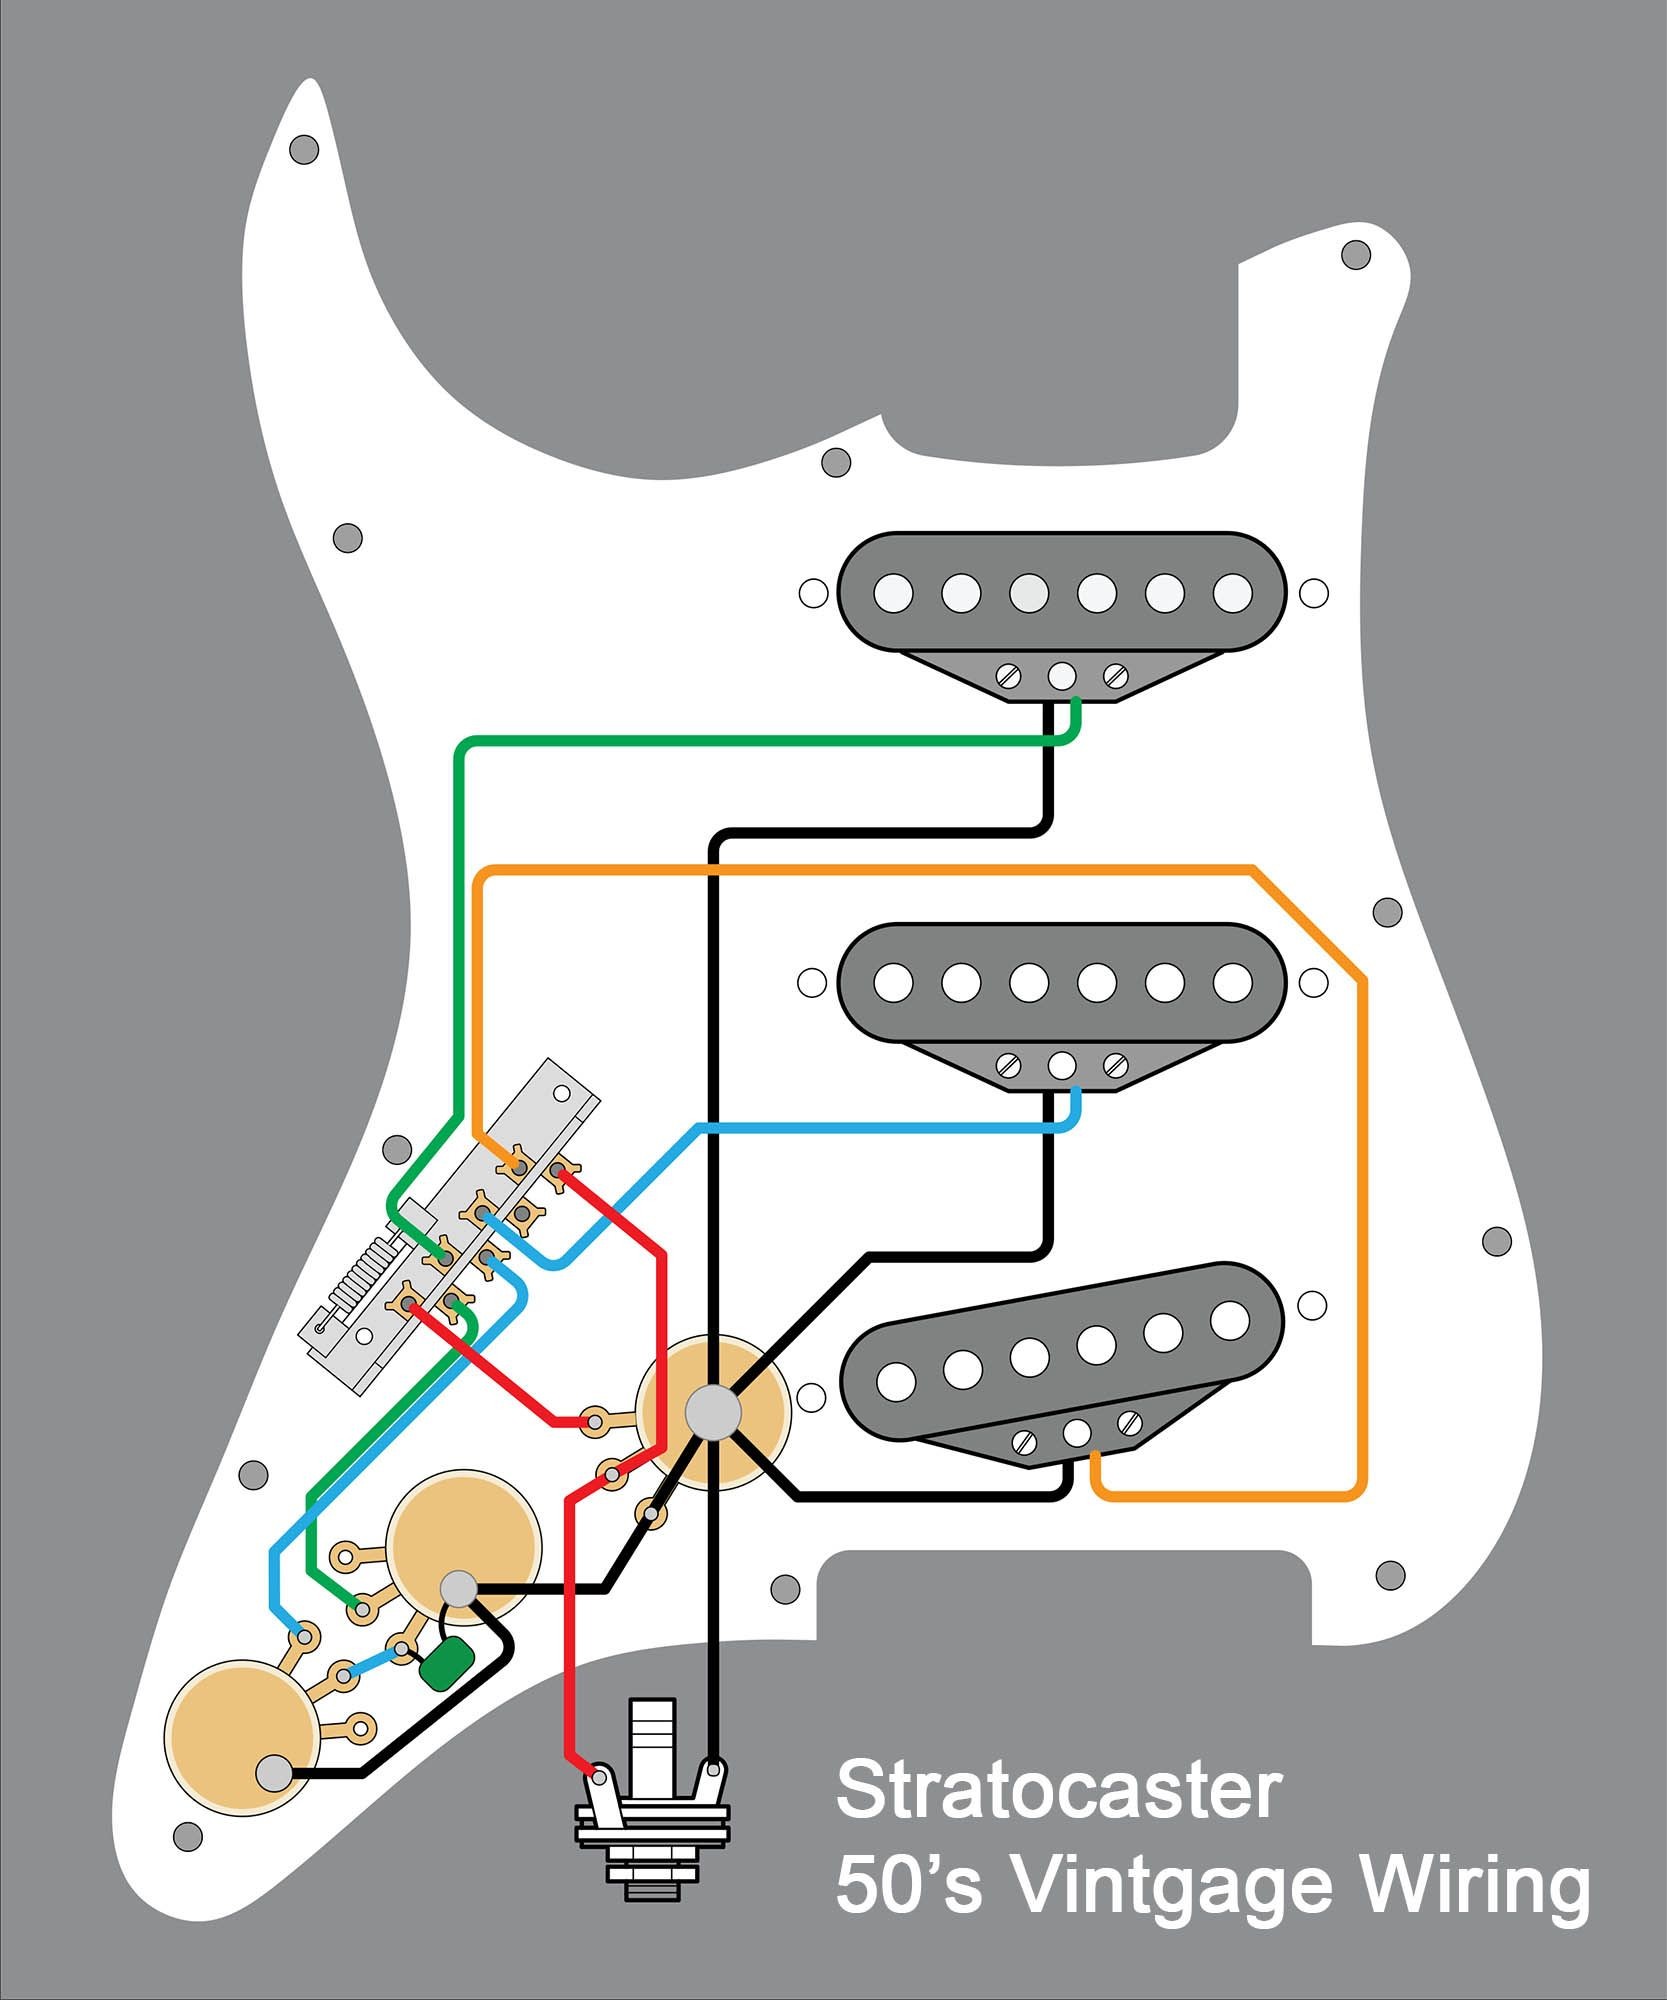 How to Wire Wilkinson Humbucker Pickup | Wiring Diagram Image